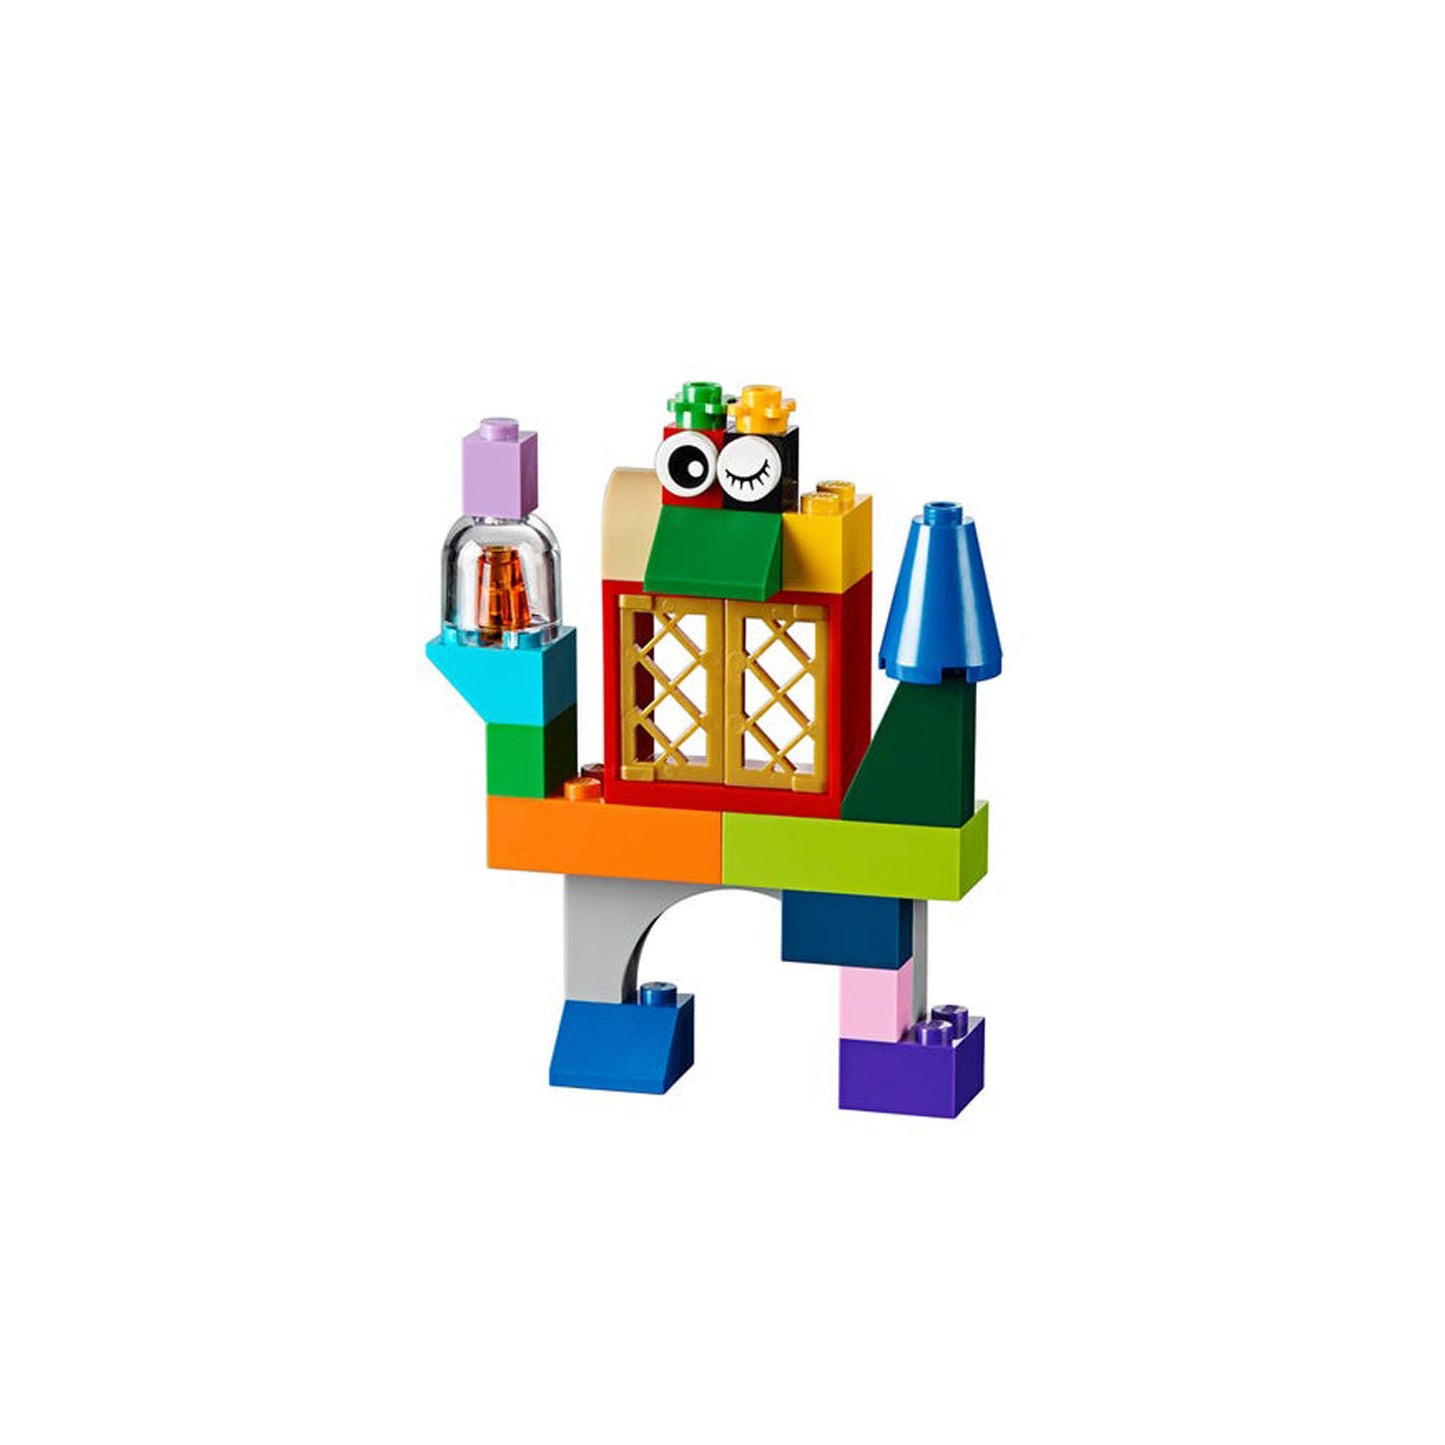 Lego Classic Caja Grande De Ladrillos Creativos 10698